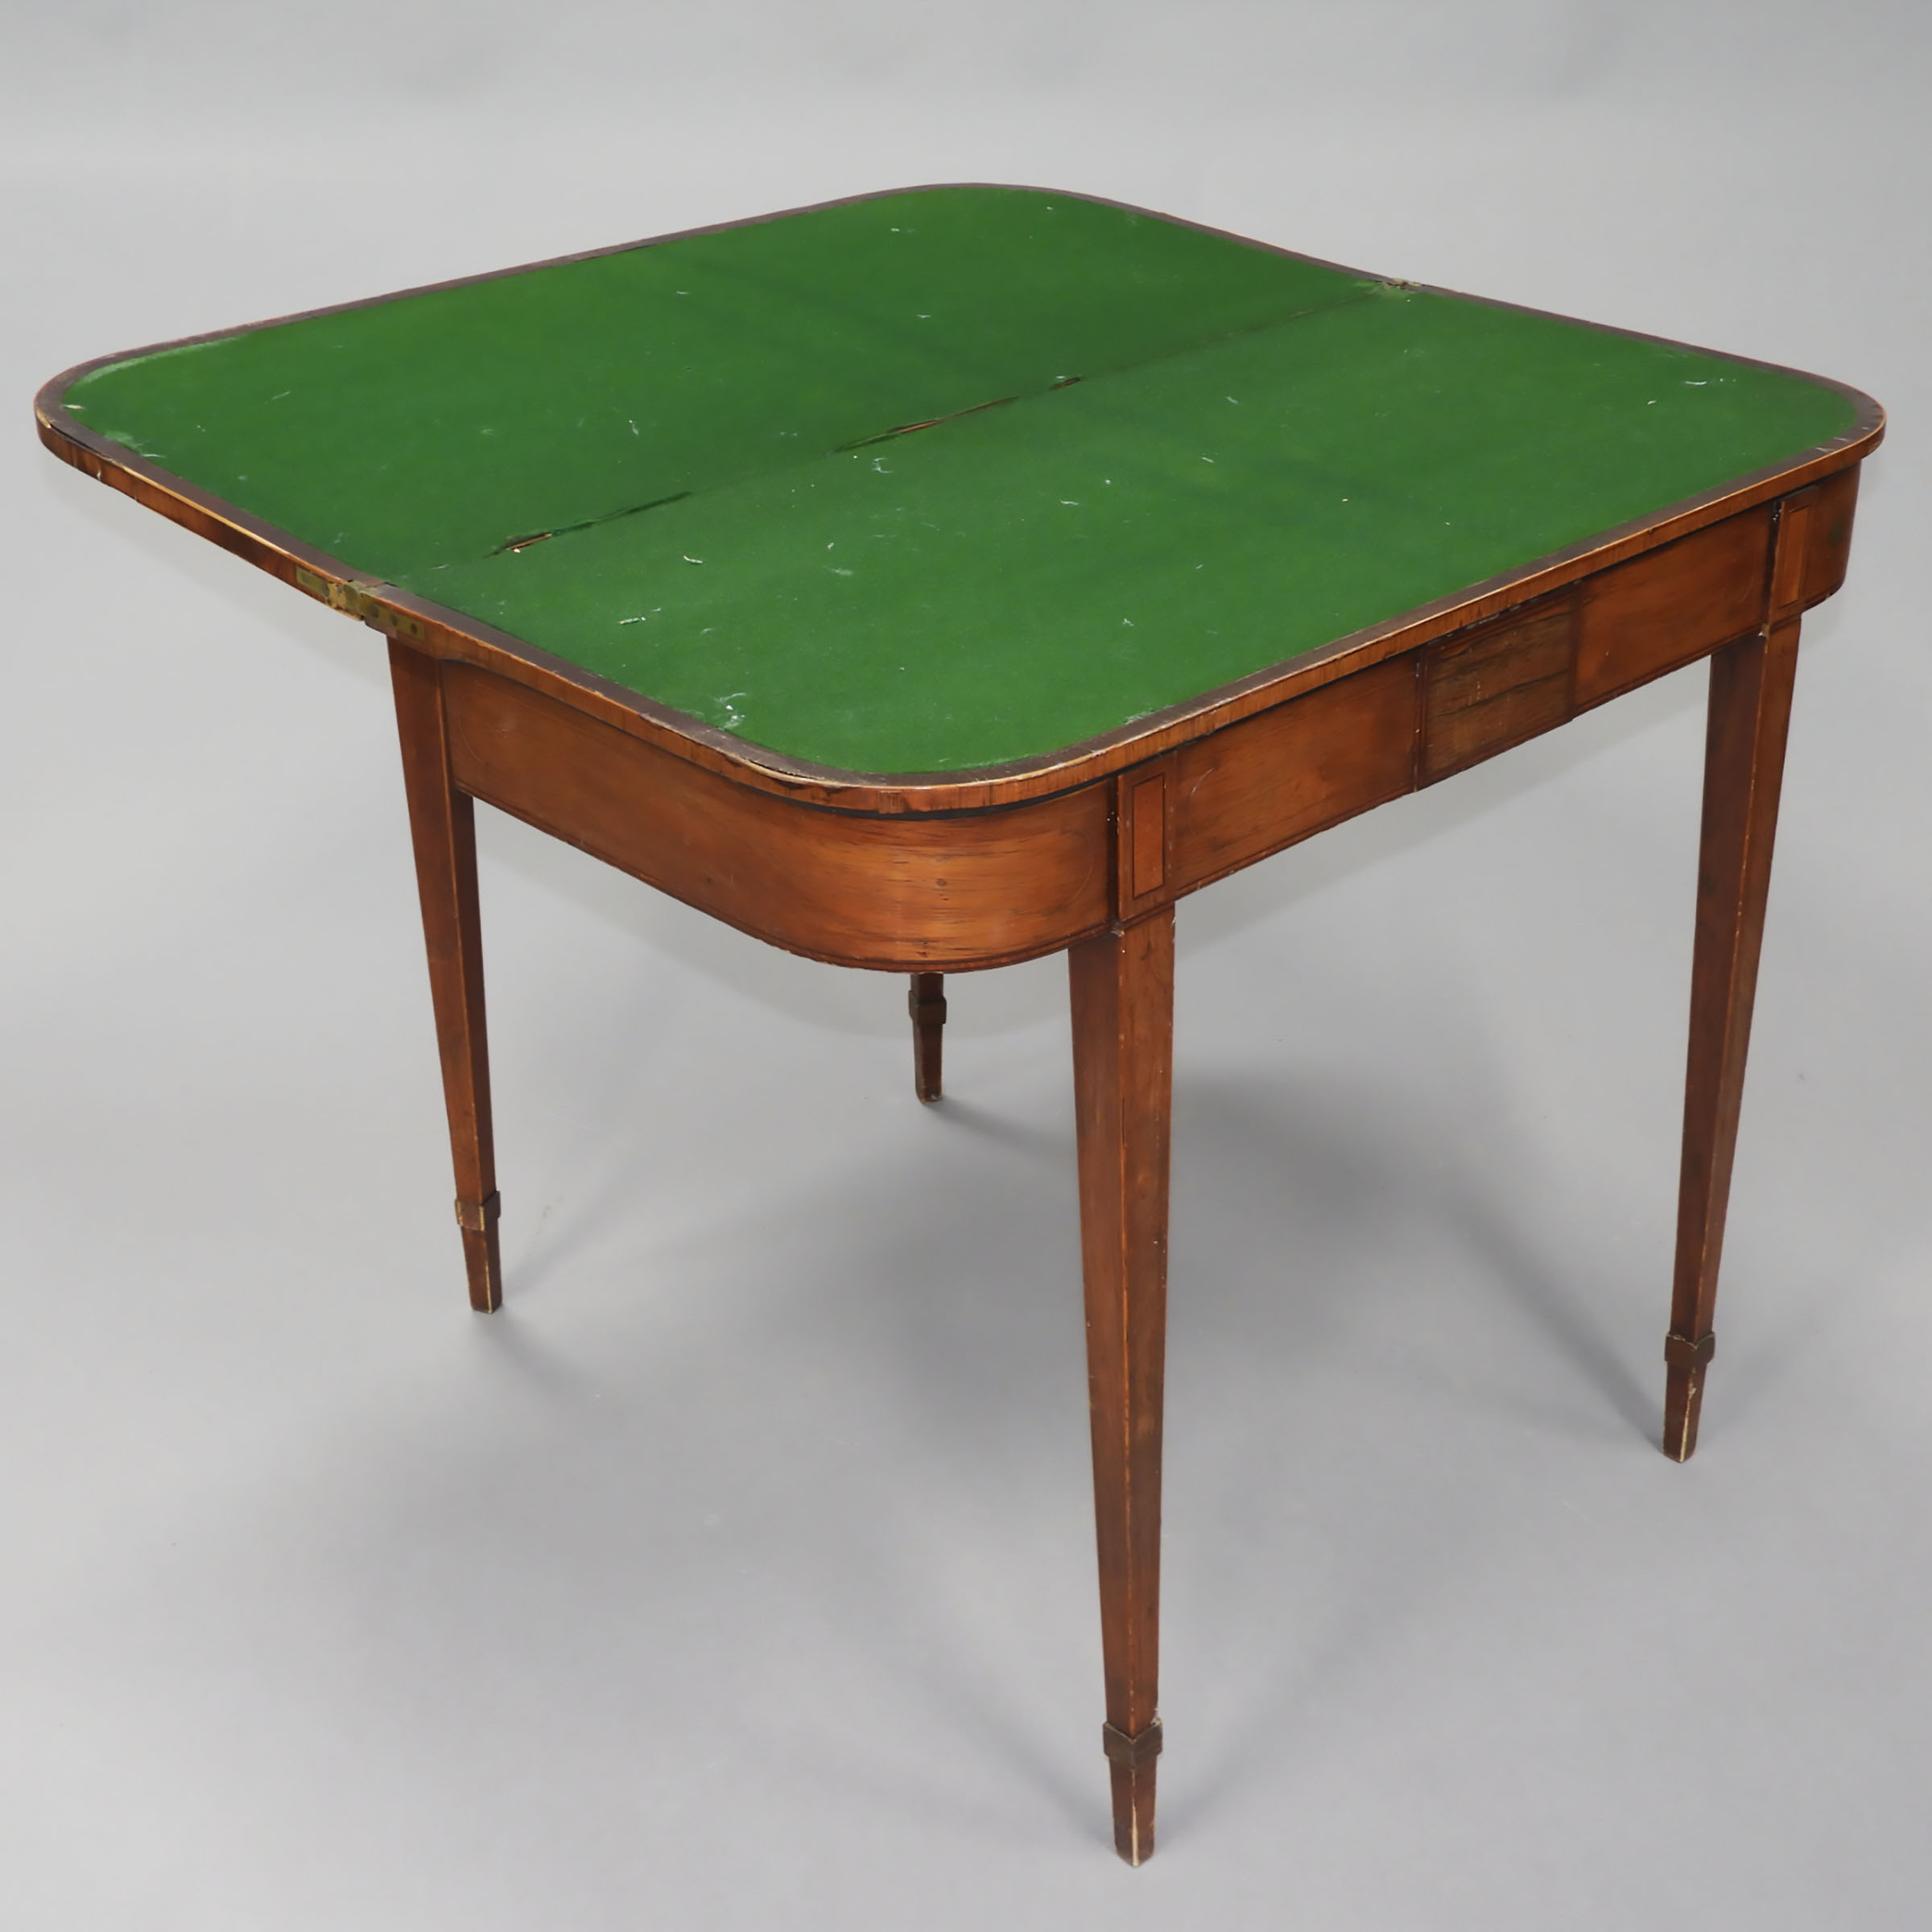 Regency Satinwood Crossbanded Rosewood Gate-Leg Games Table, early 19th century